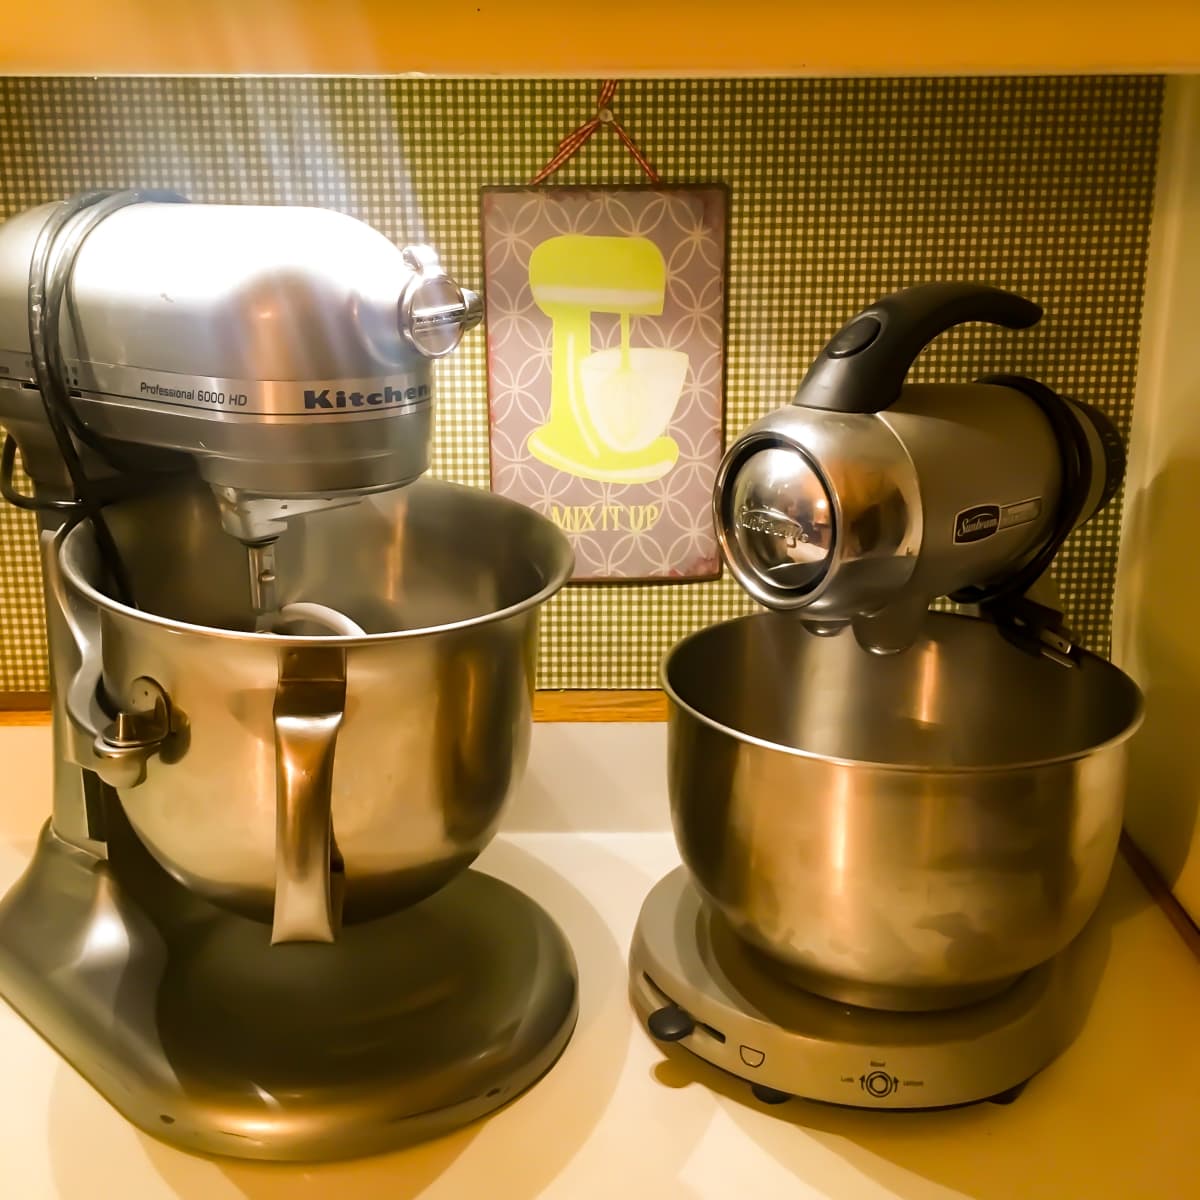 17 Baking Tools Every Home Kitchen Needs - Delishably